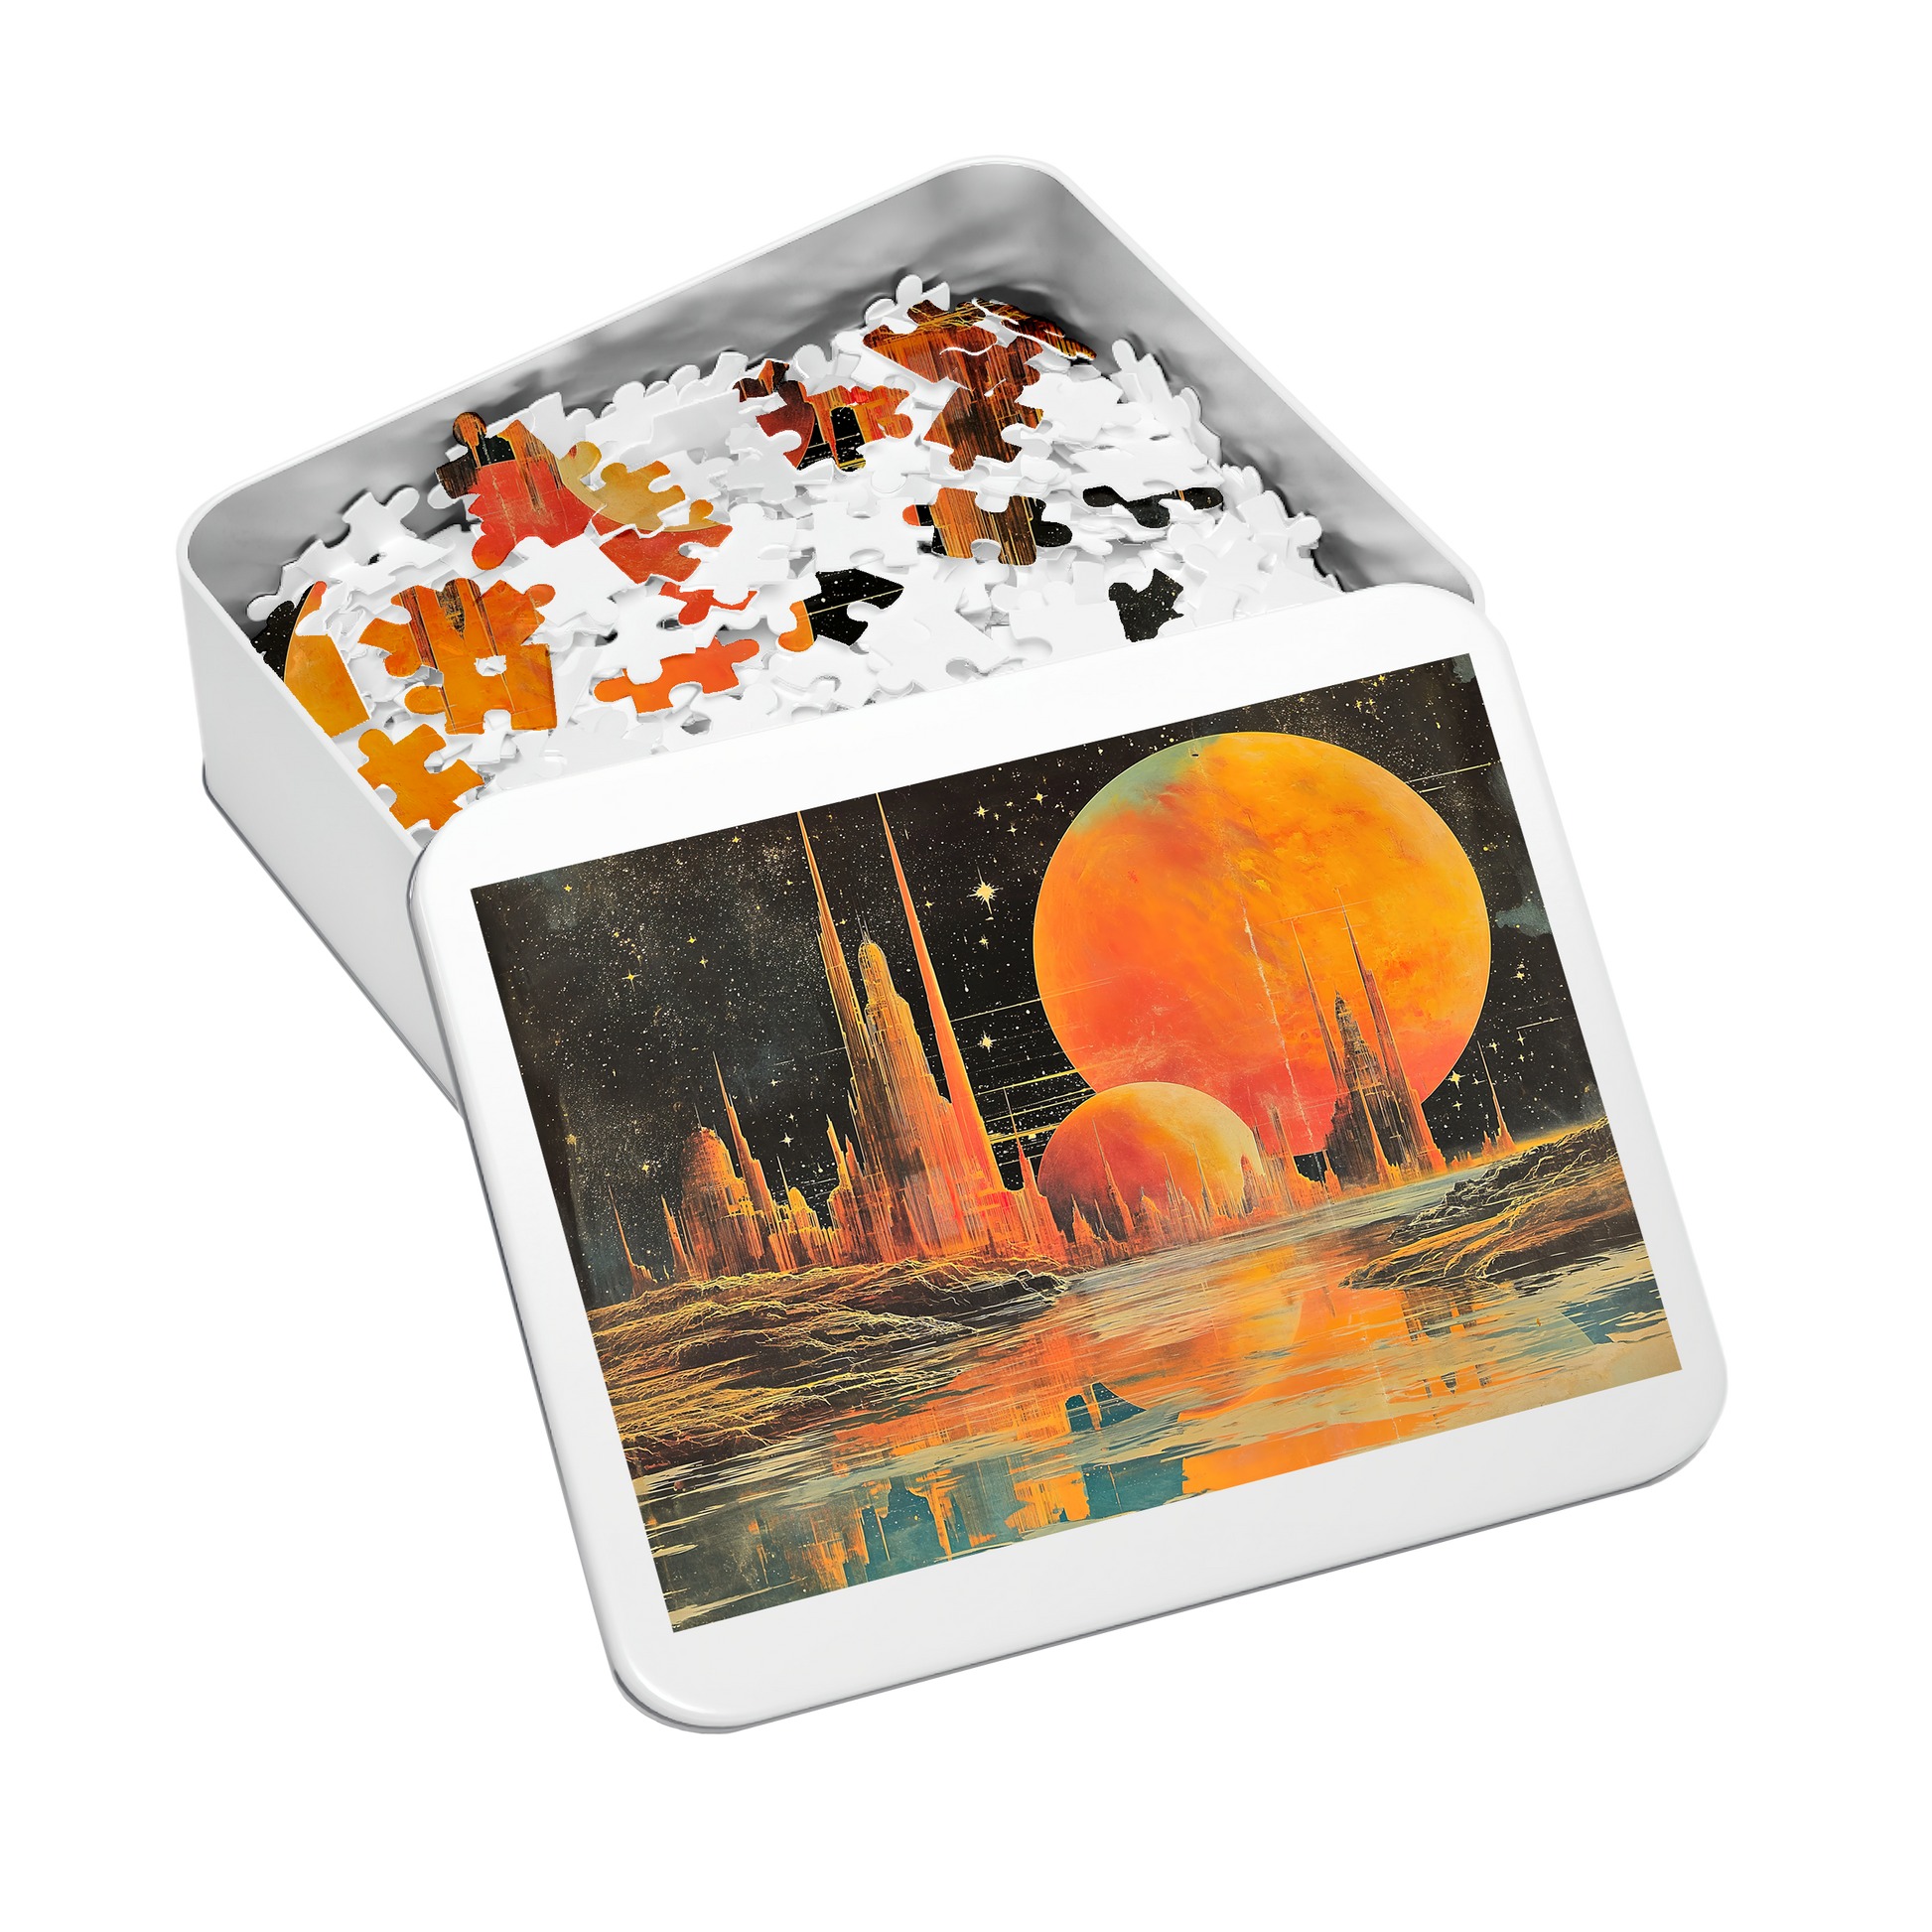 Starscape - Premium Jigsaw Puzzle, Vibrant, Sci-fi - Multiple Sizes Available